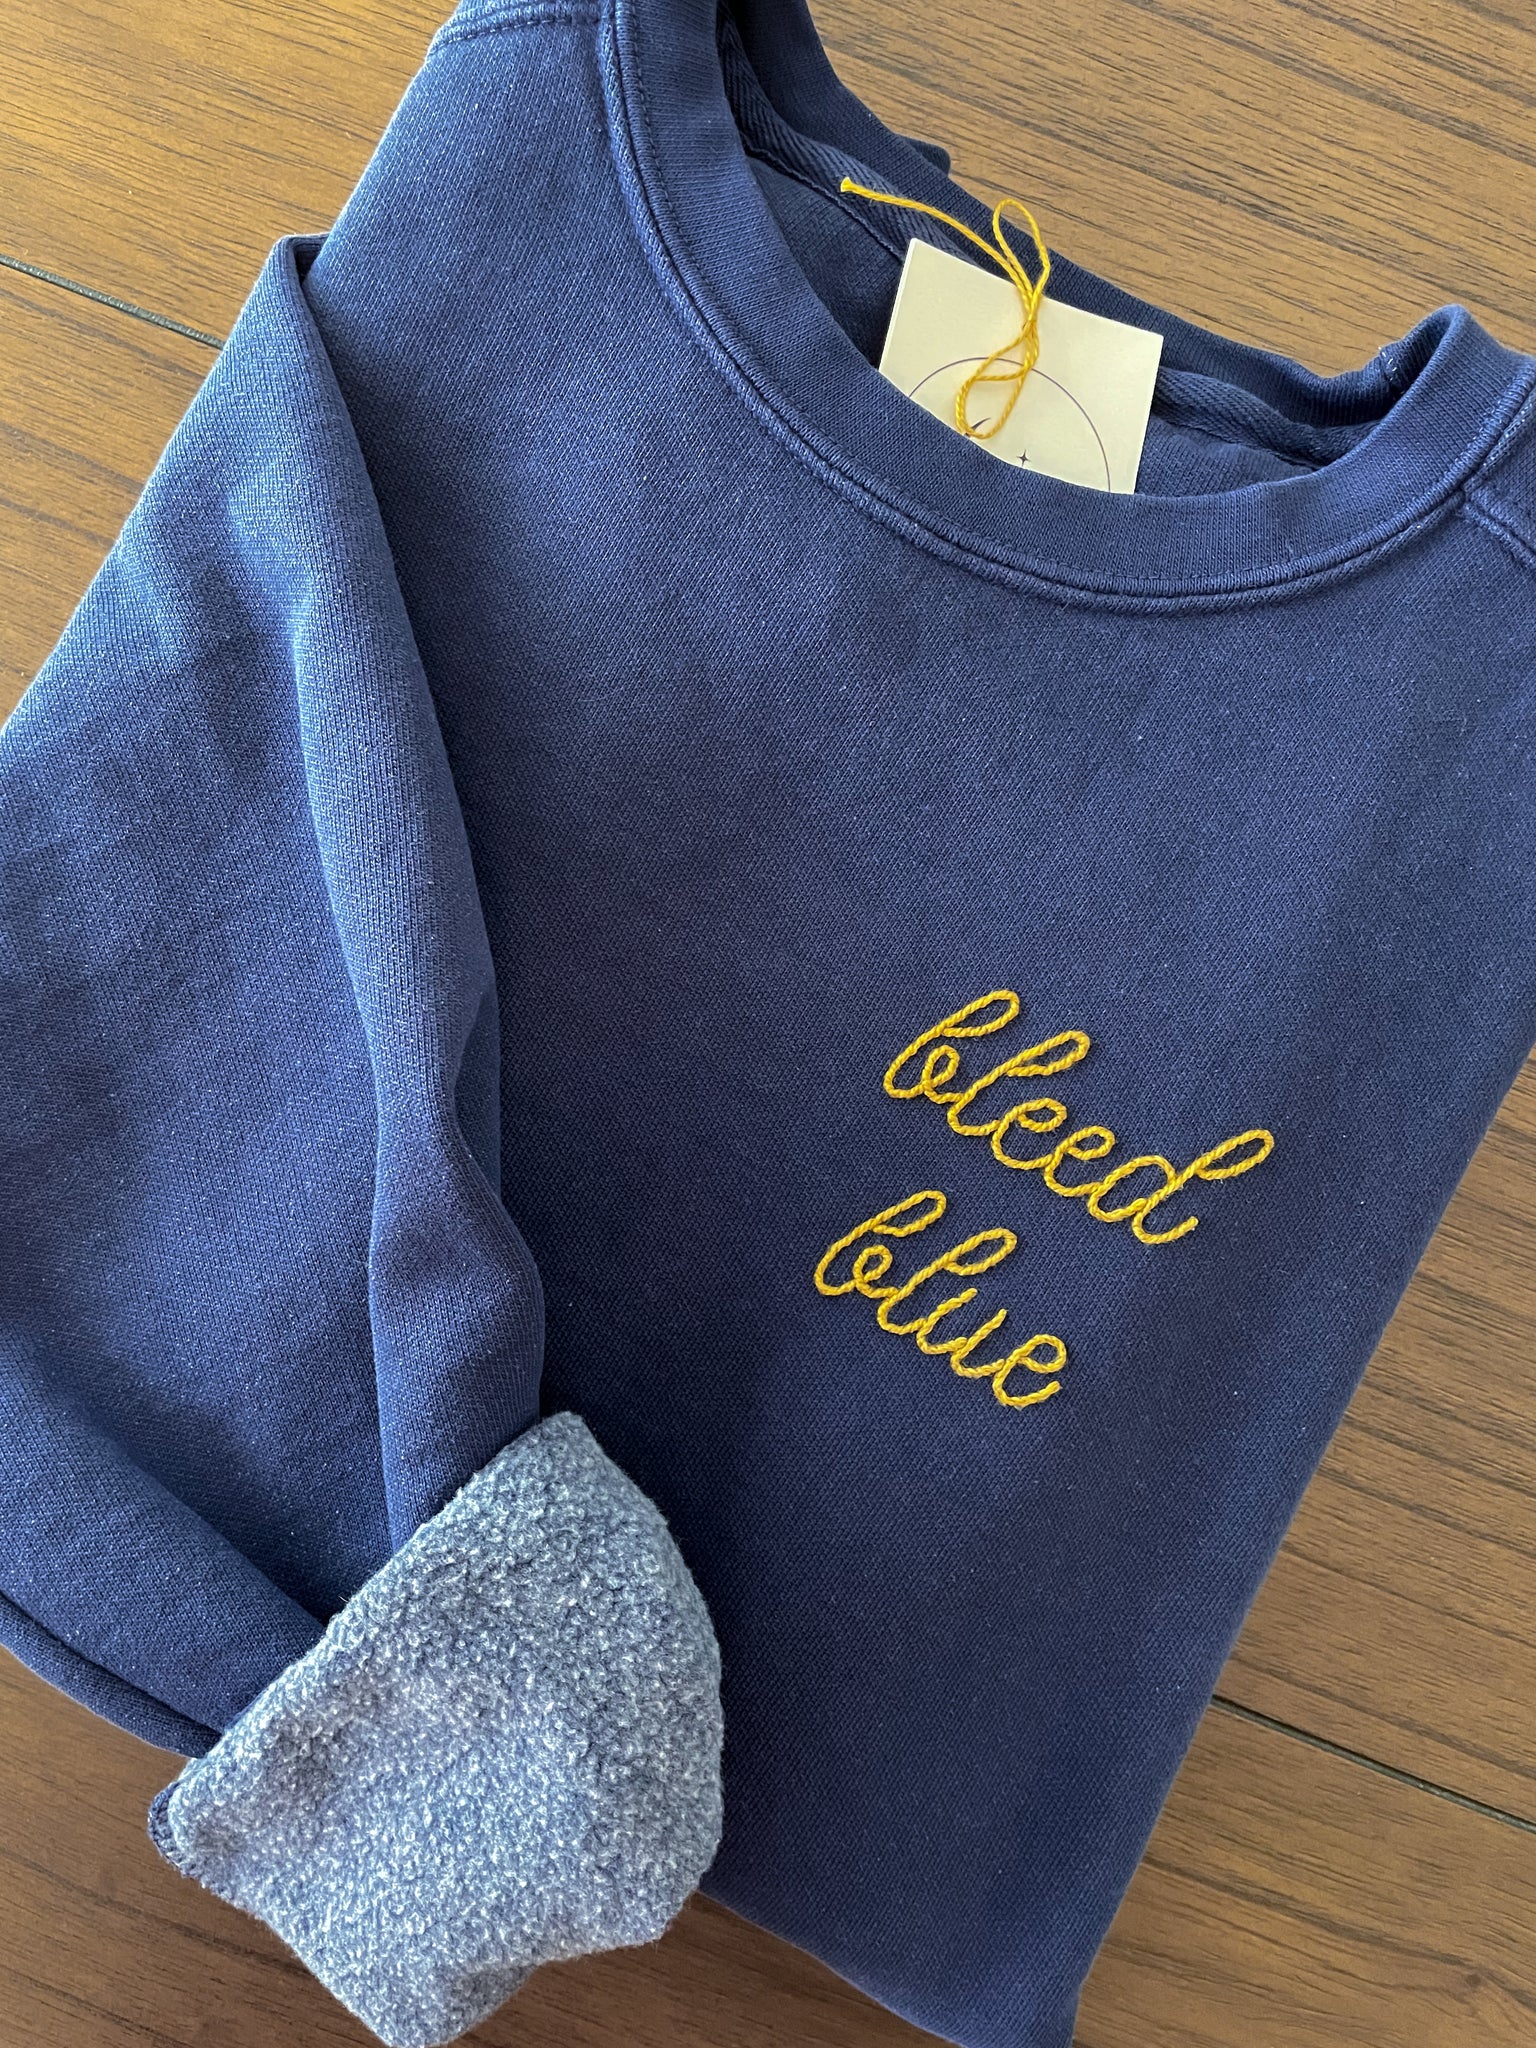 Navy Bleed Blue Hand Embroidered Sweatshirt or Tshirt